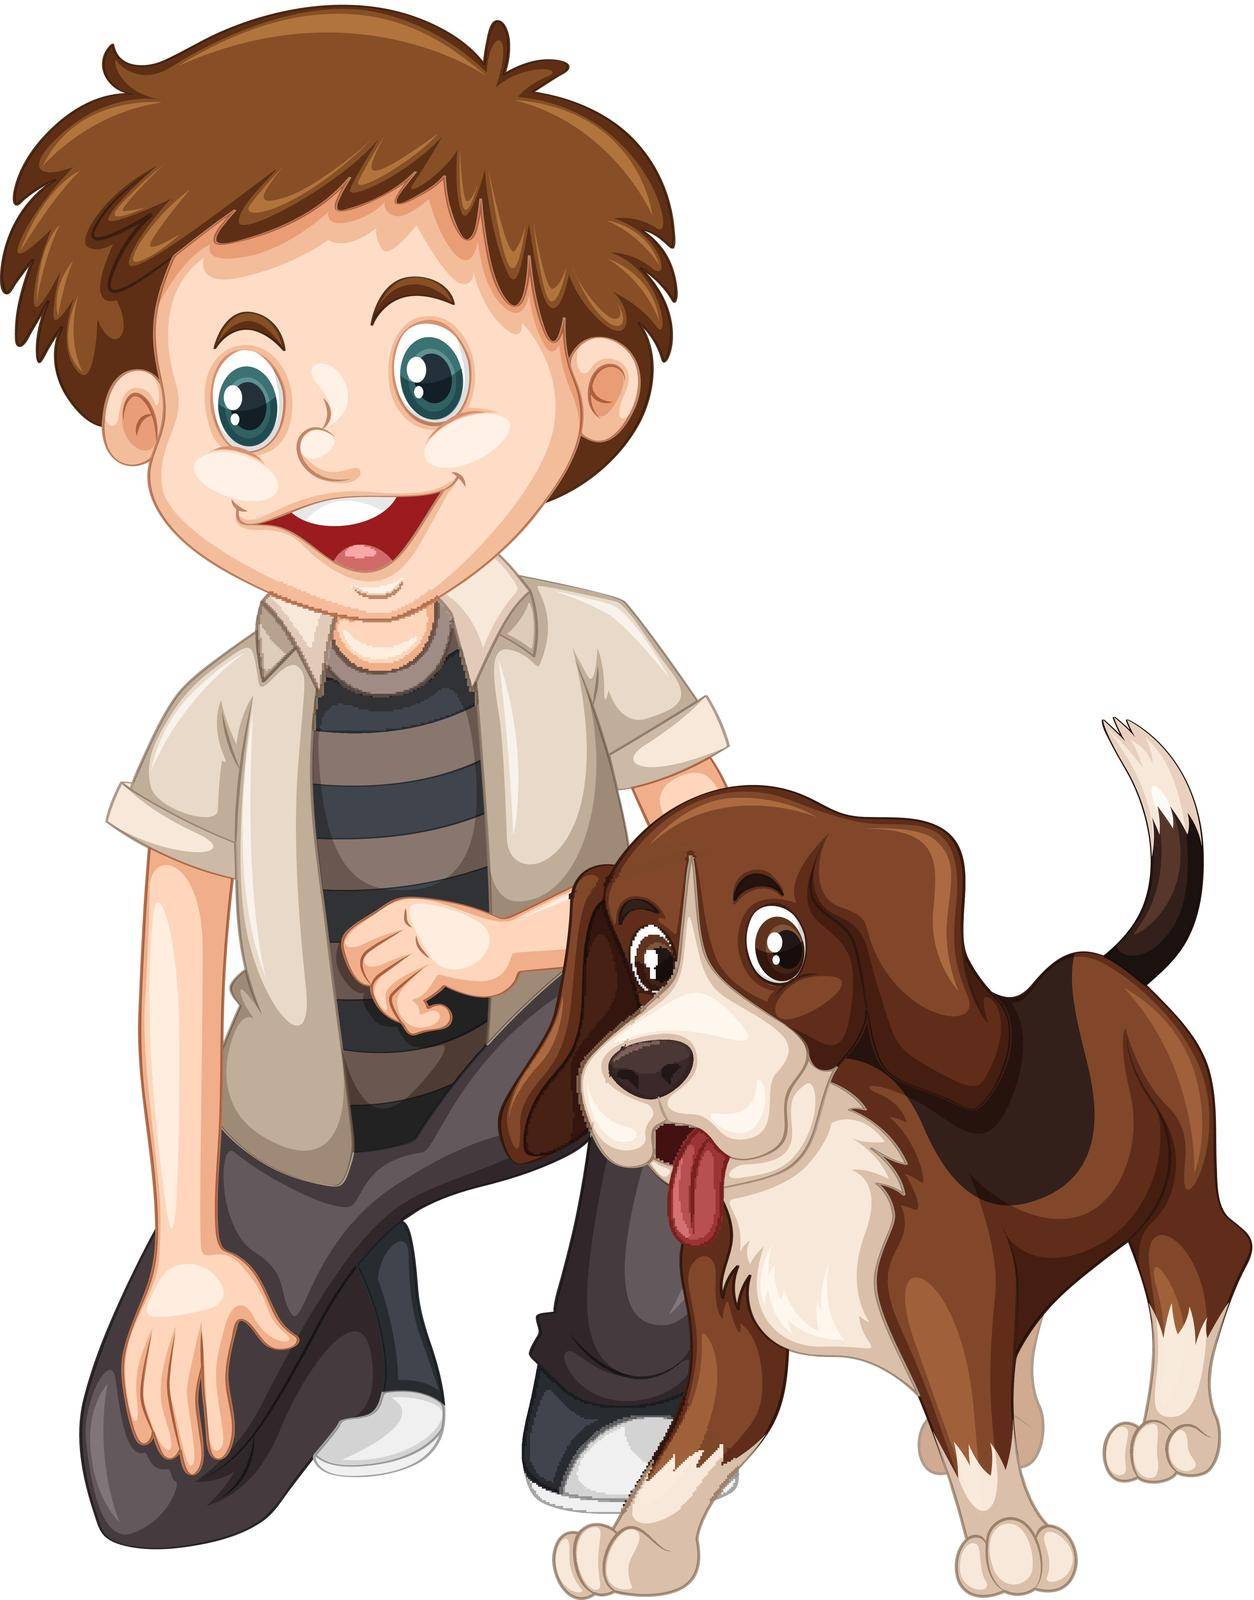 A boy and dog illustration